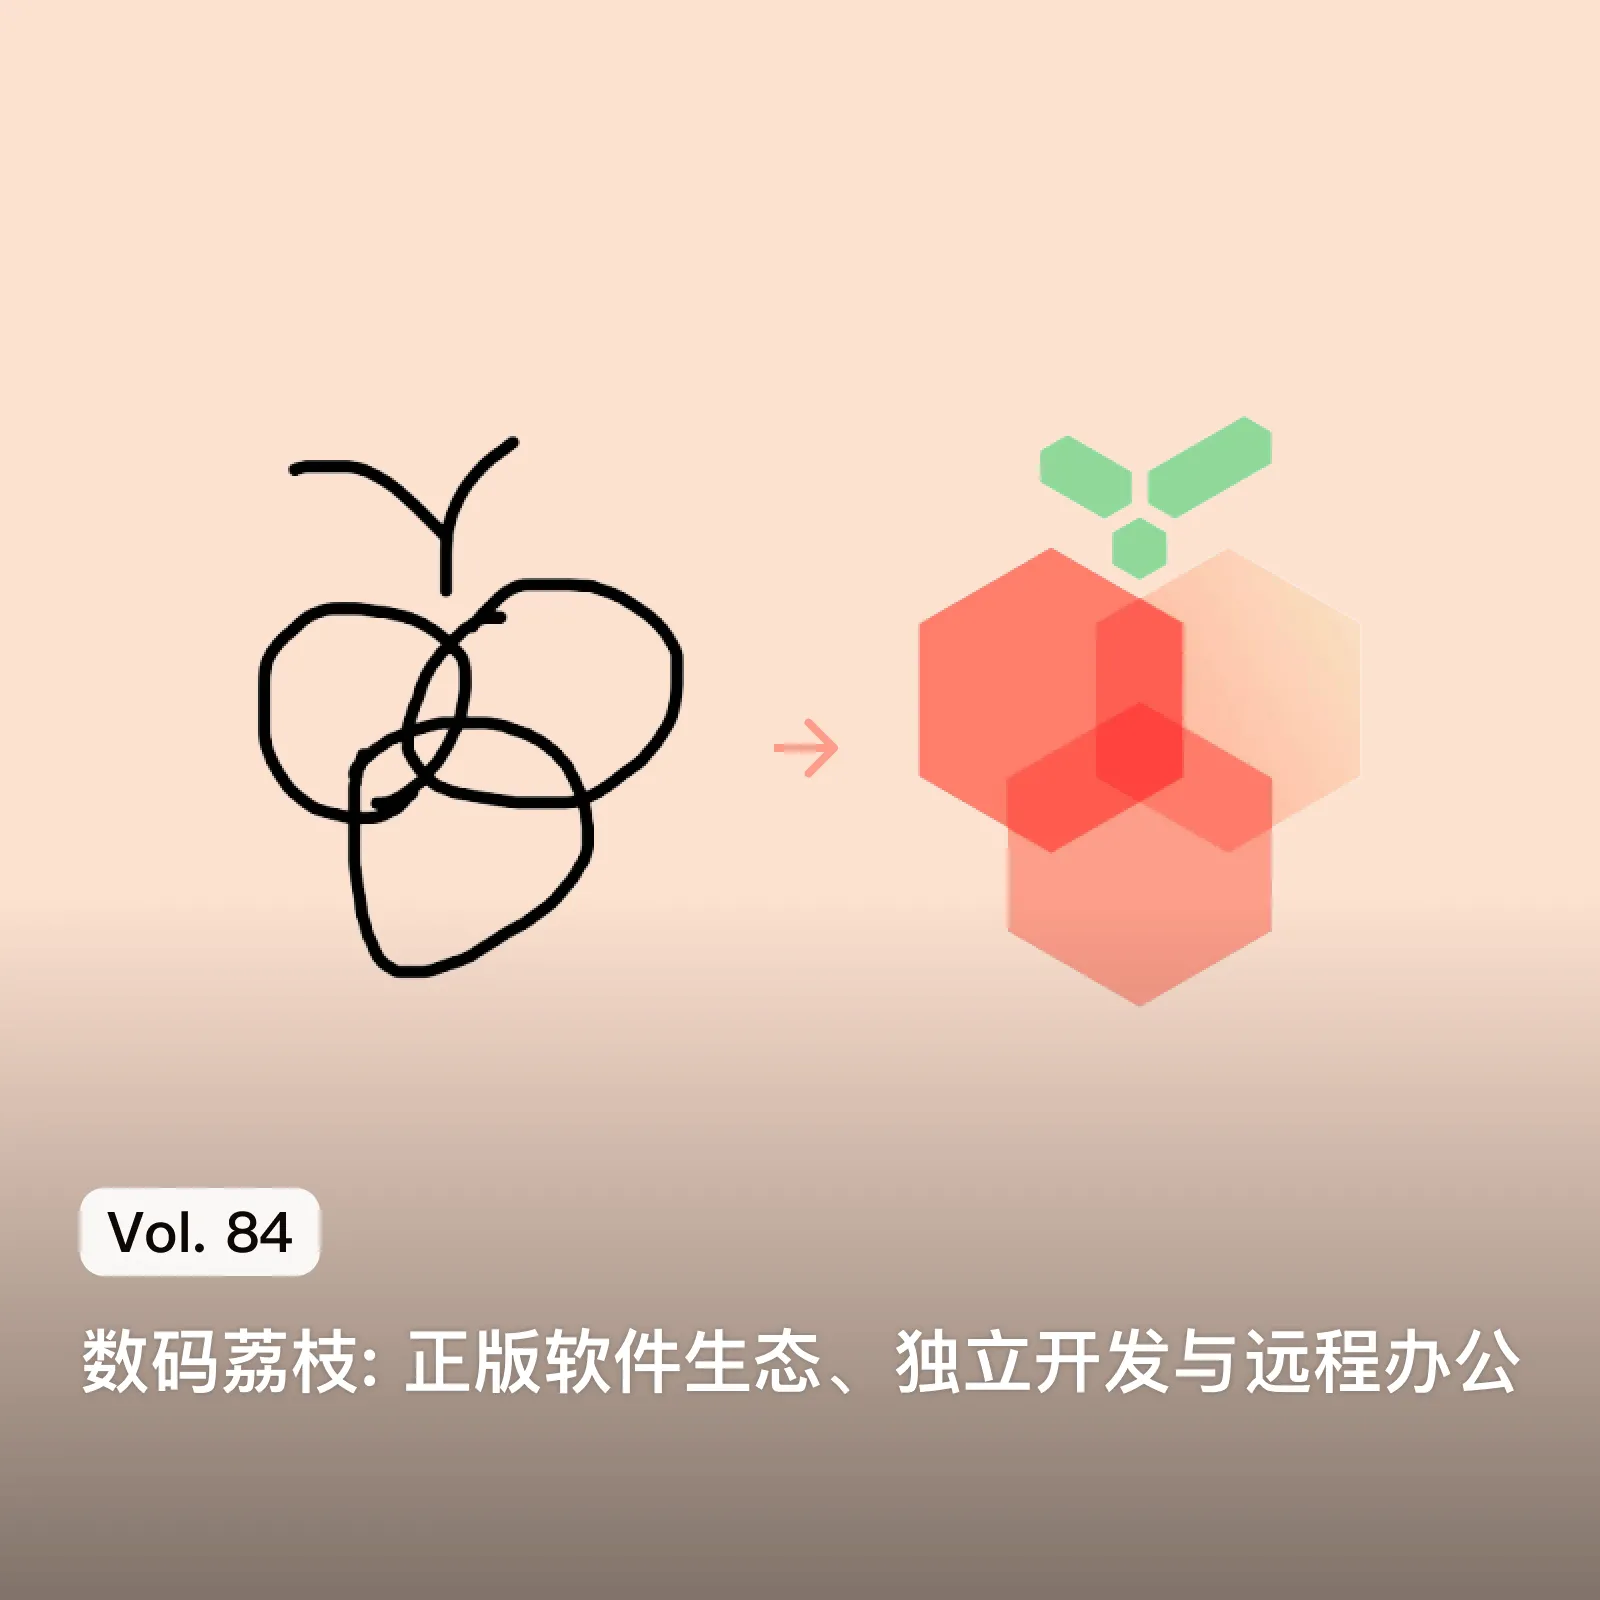 Vol. 84 数码荔枝: 正版软件生态、独立开发与远程办公